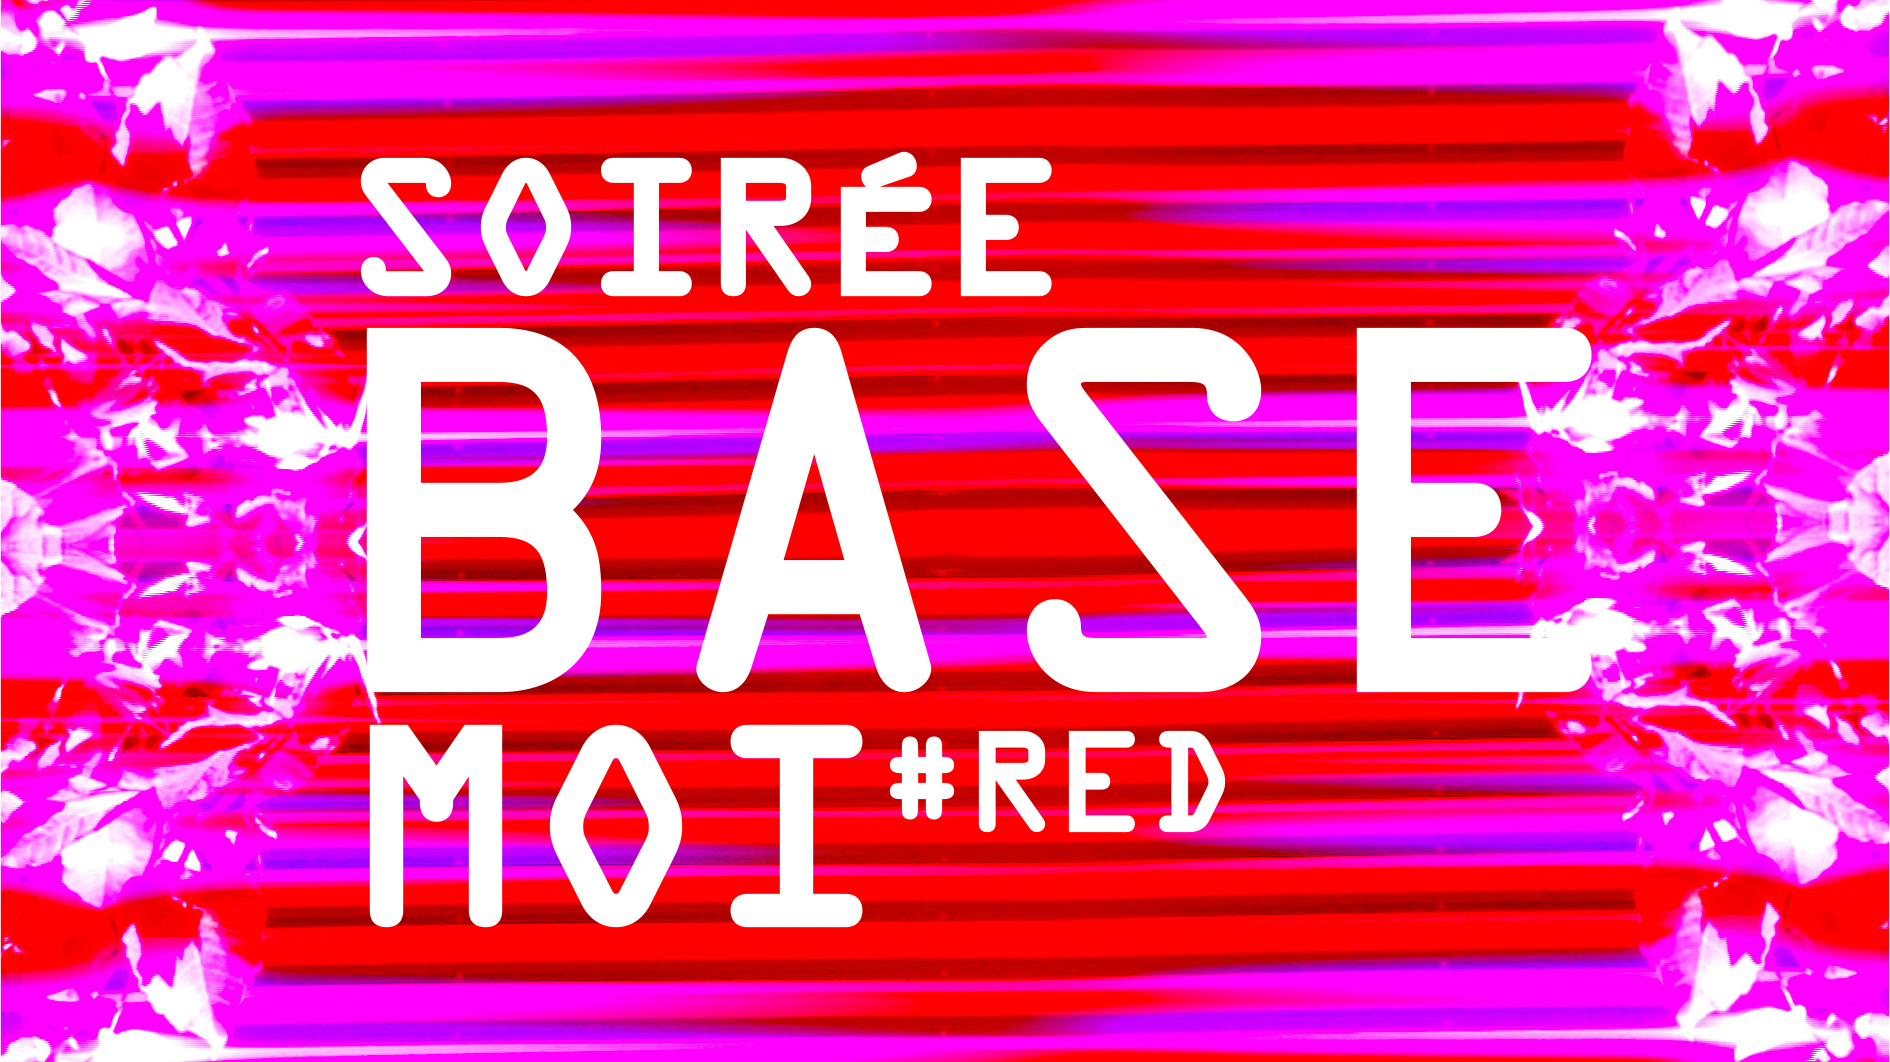 Soirée BASE MOI #RED